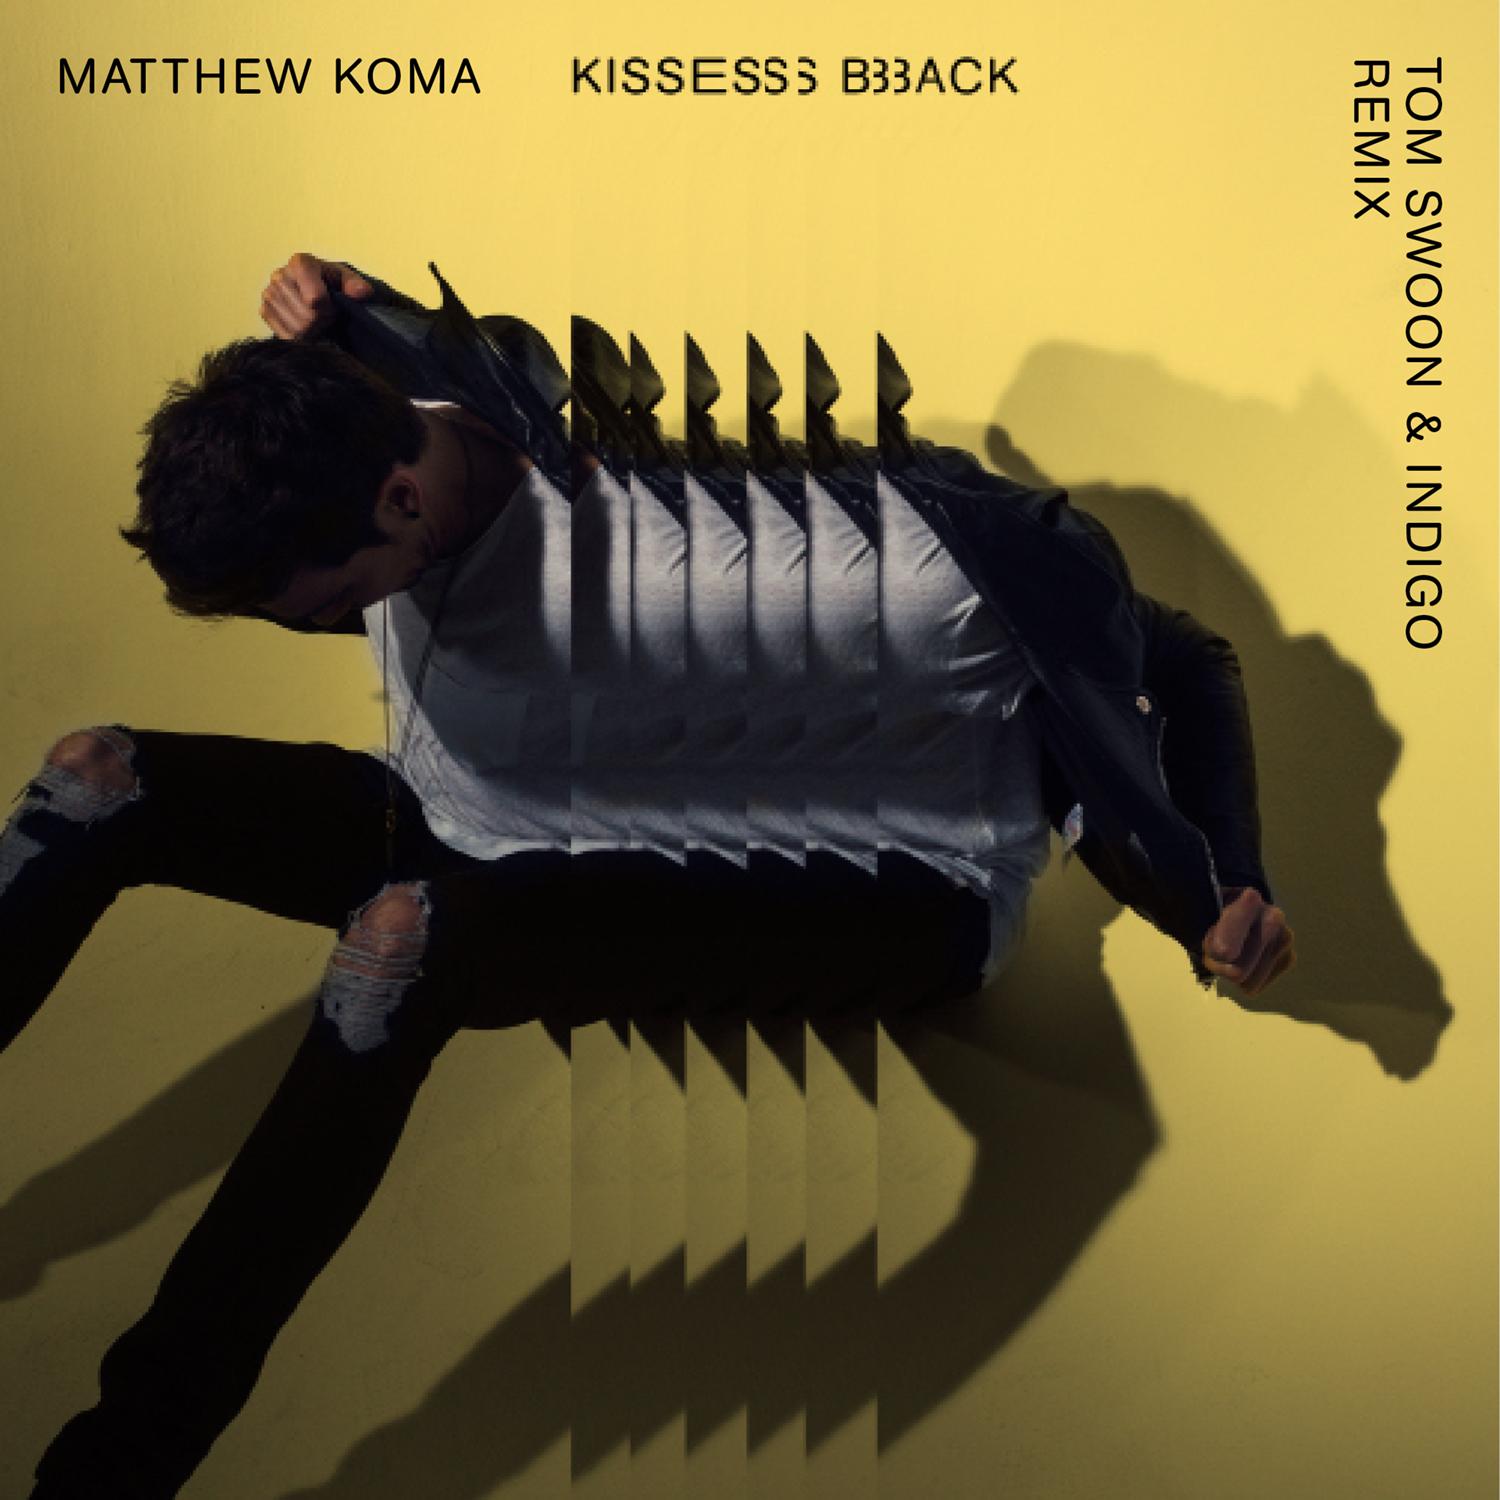 Tom Swoon autorem oficjalnego remiksu do hitu Kisses Back Matthew Koma! 